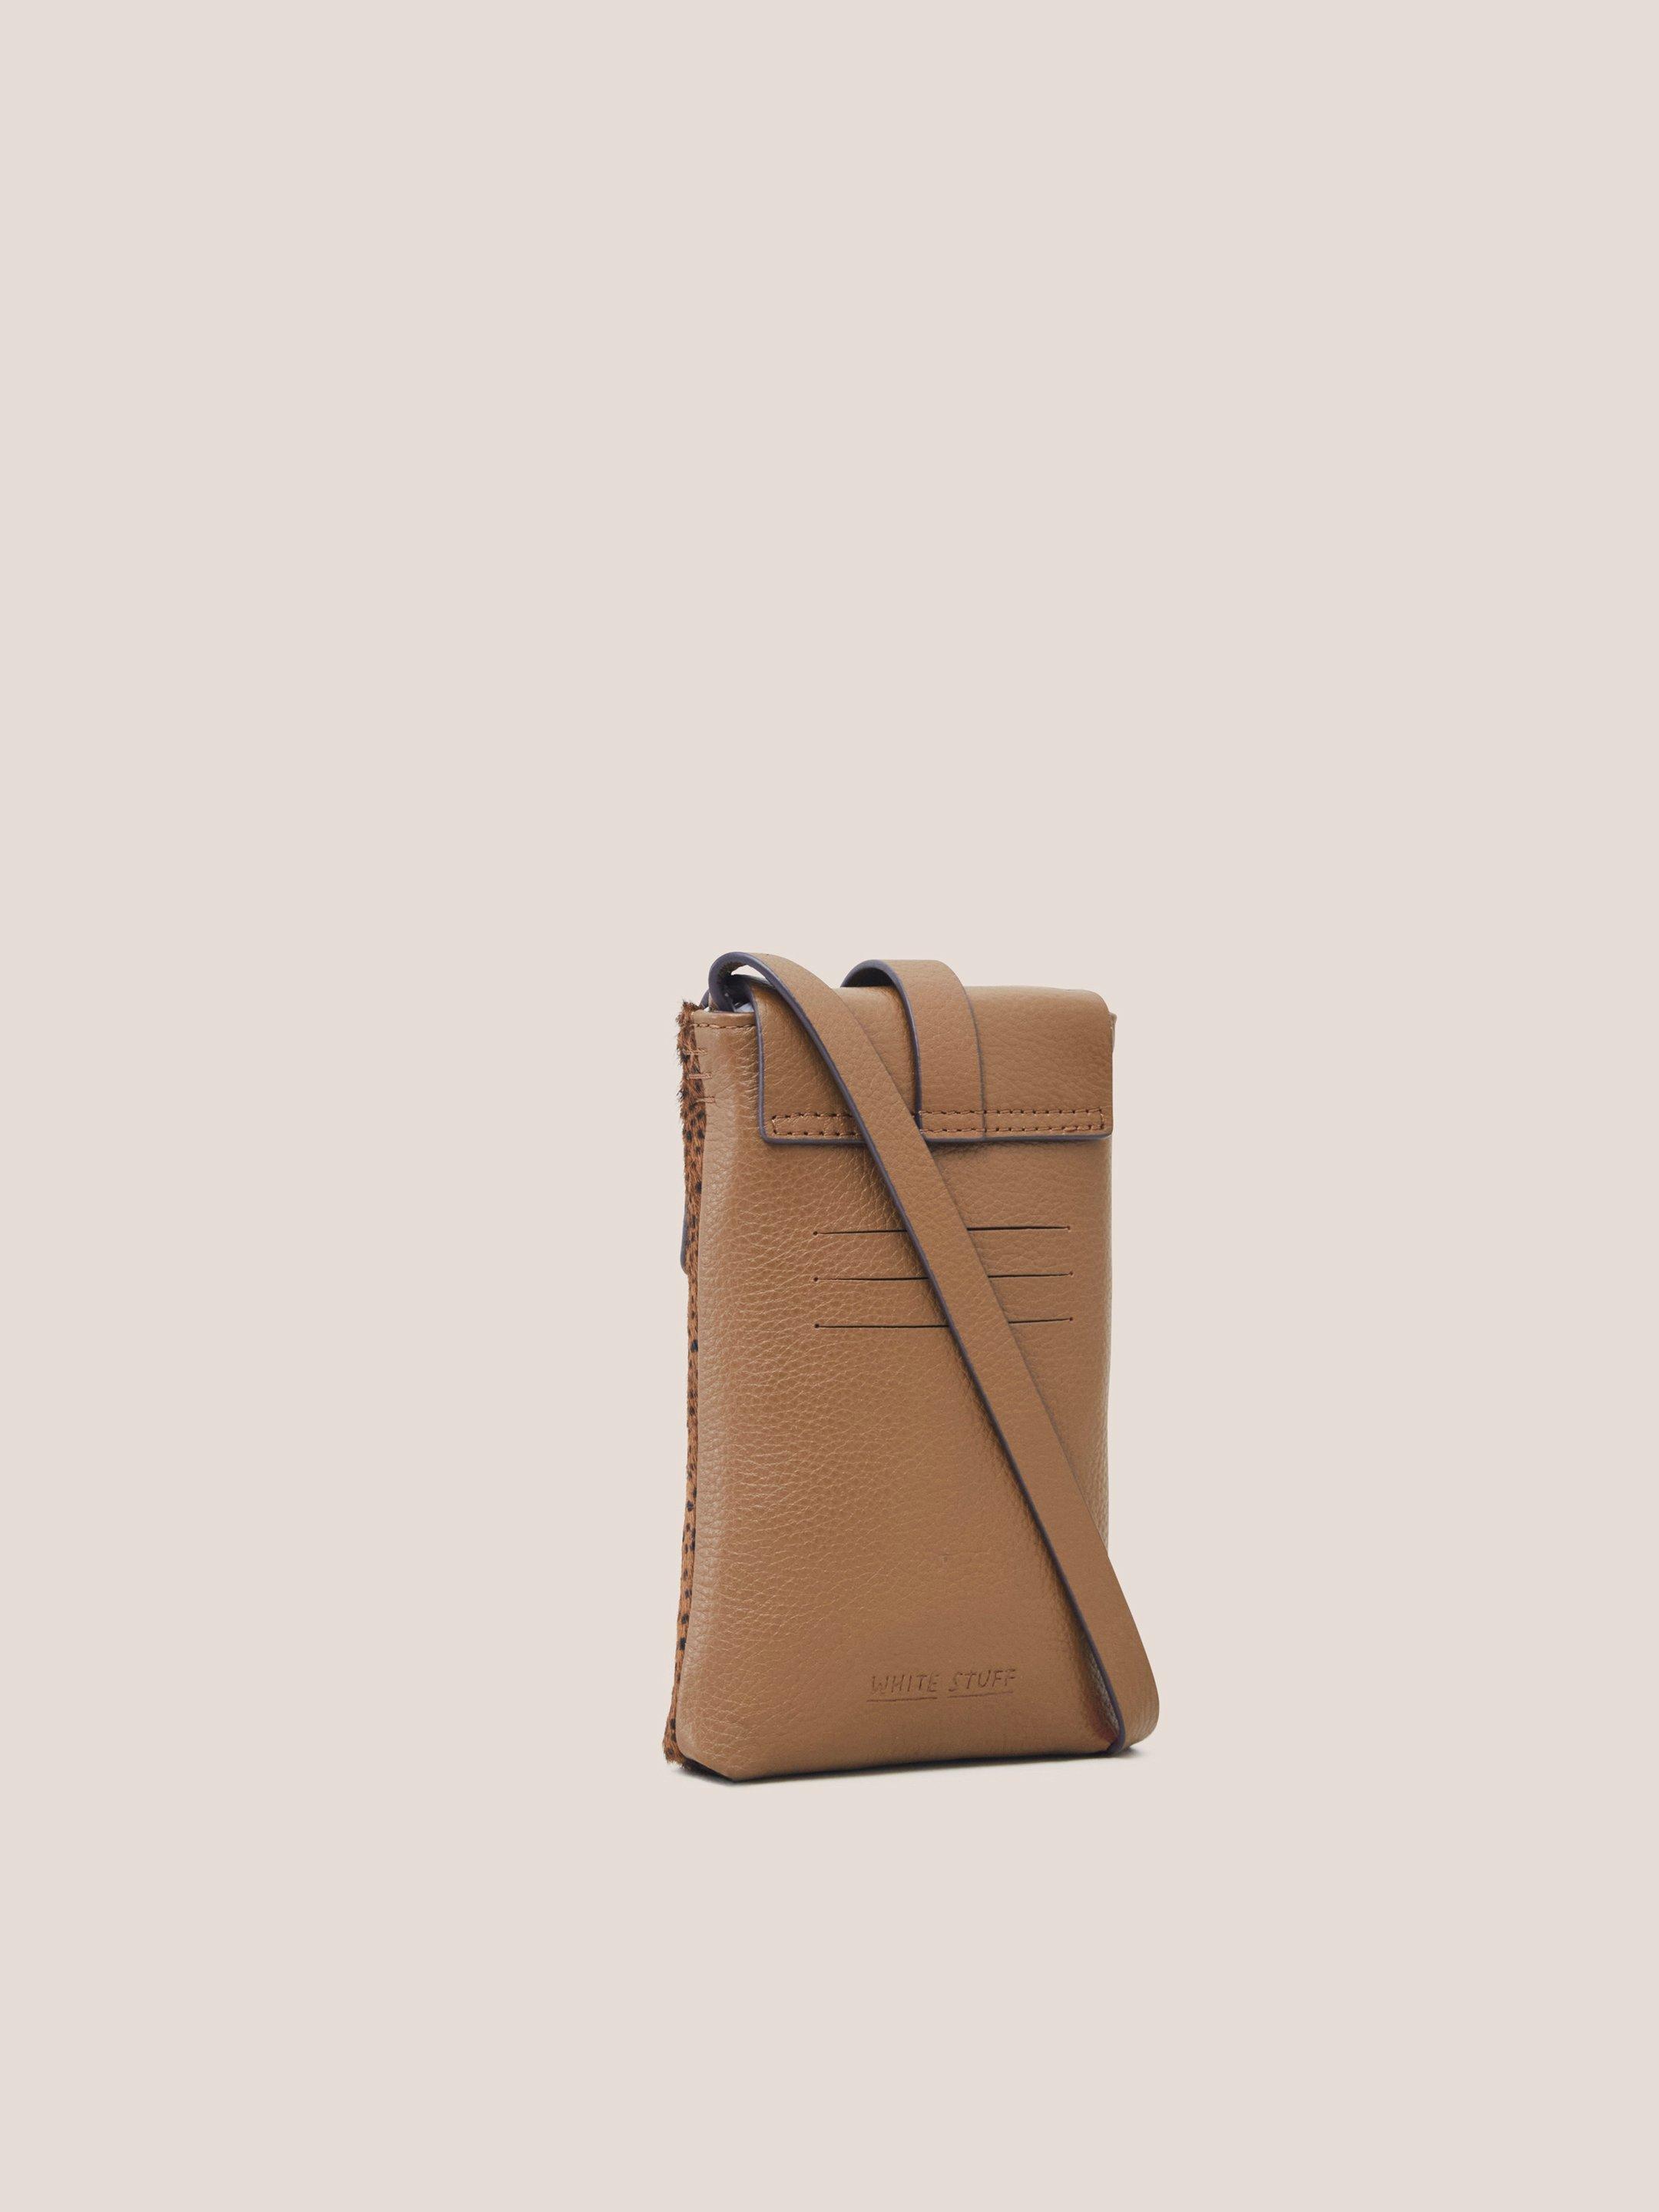 Clara Buckle Leather Phone Bag in TAN PR - FLAT BACK